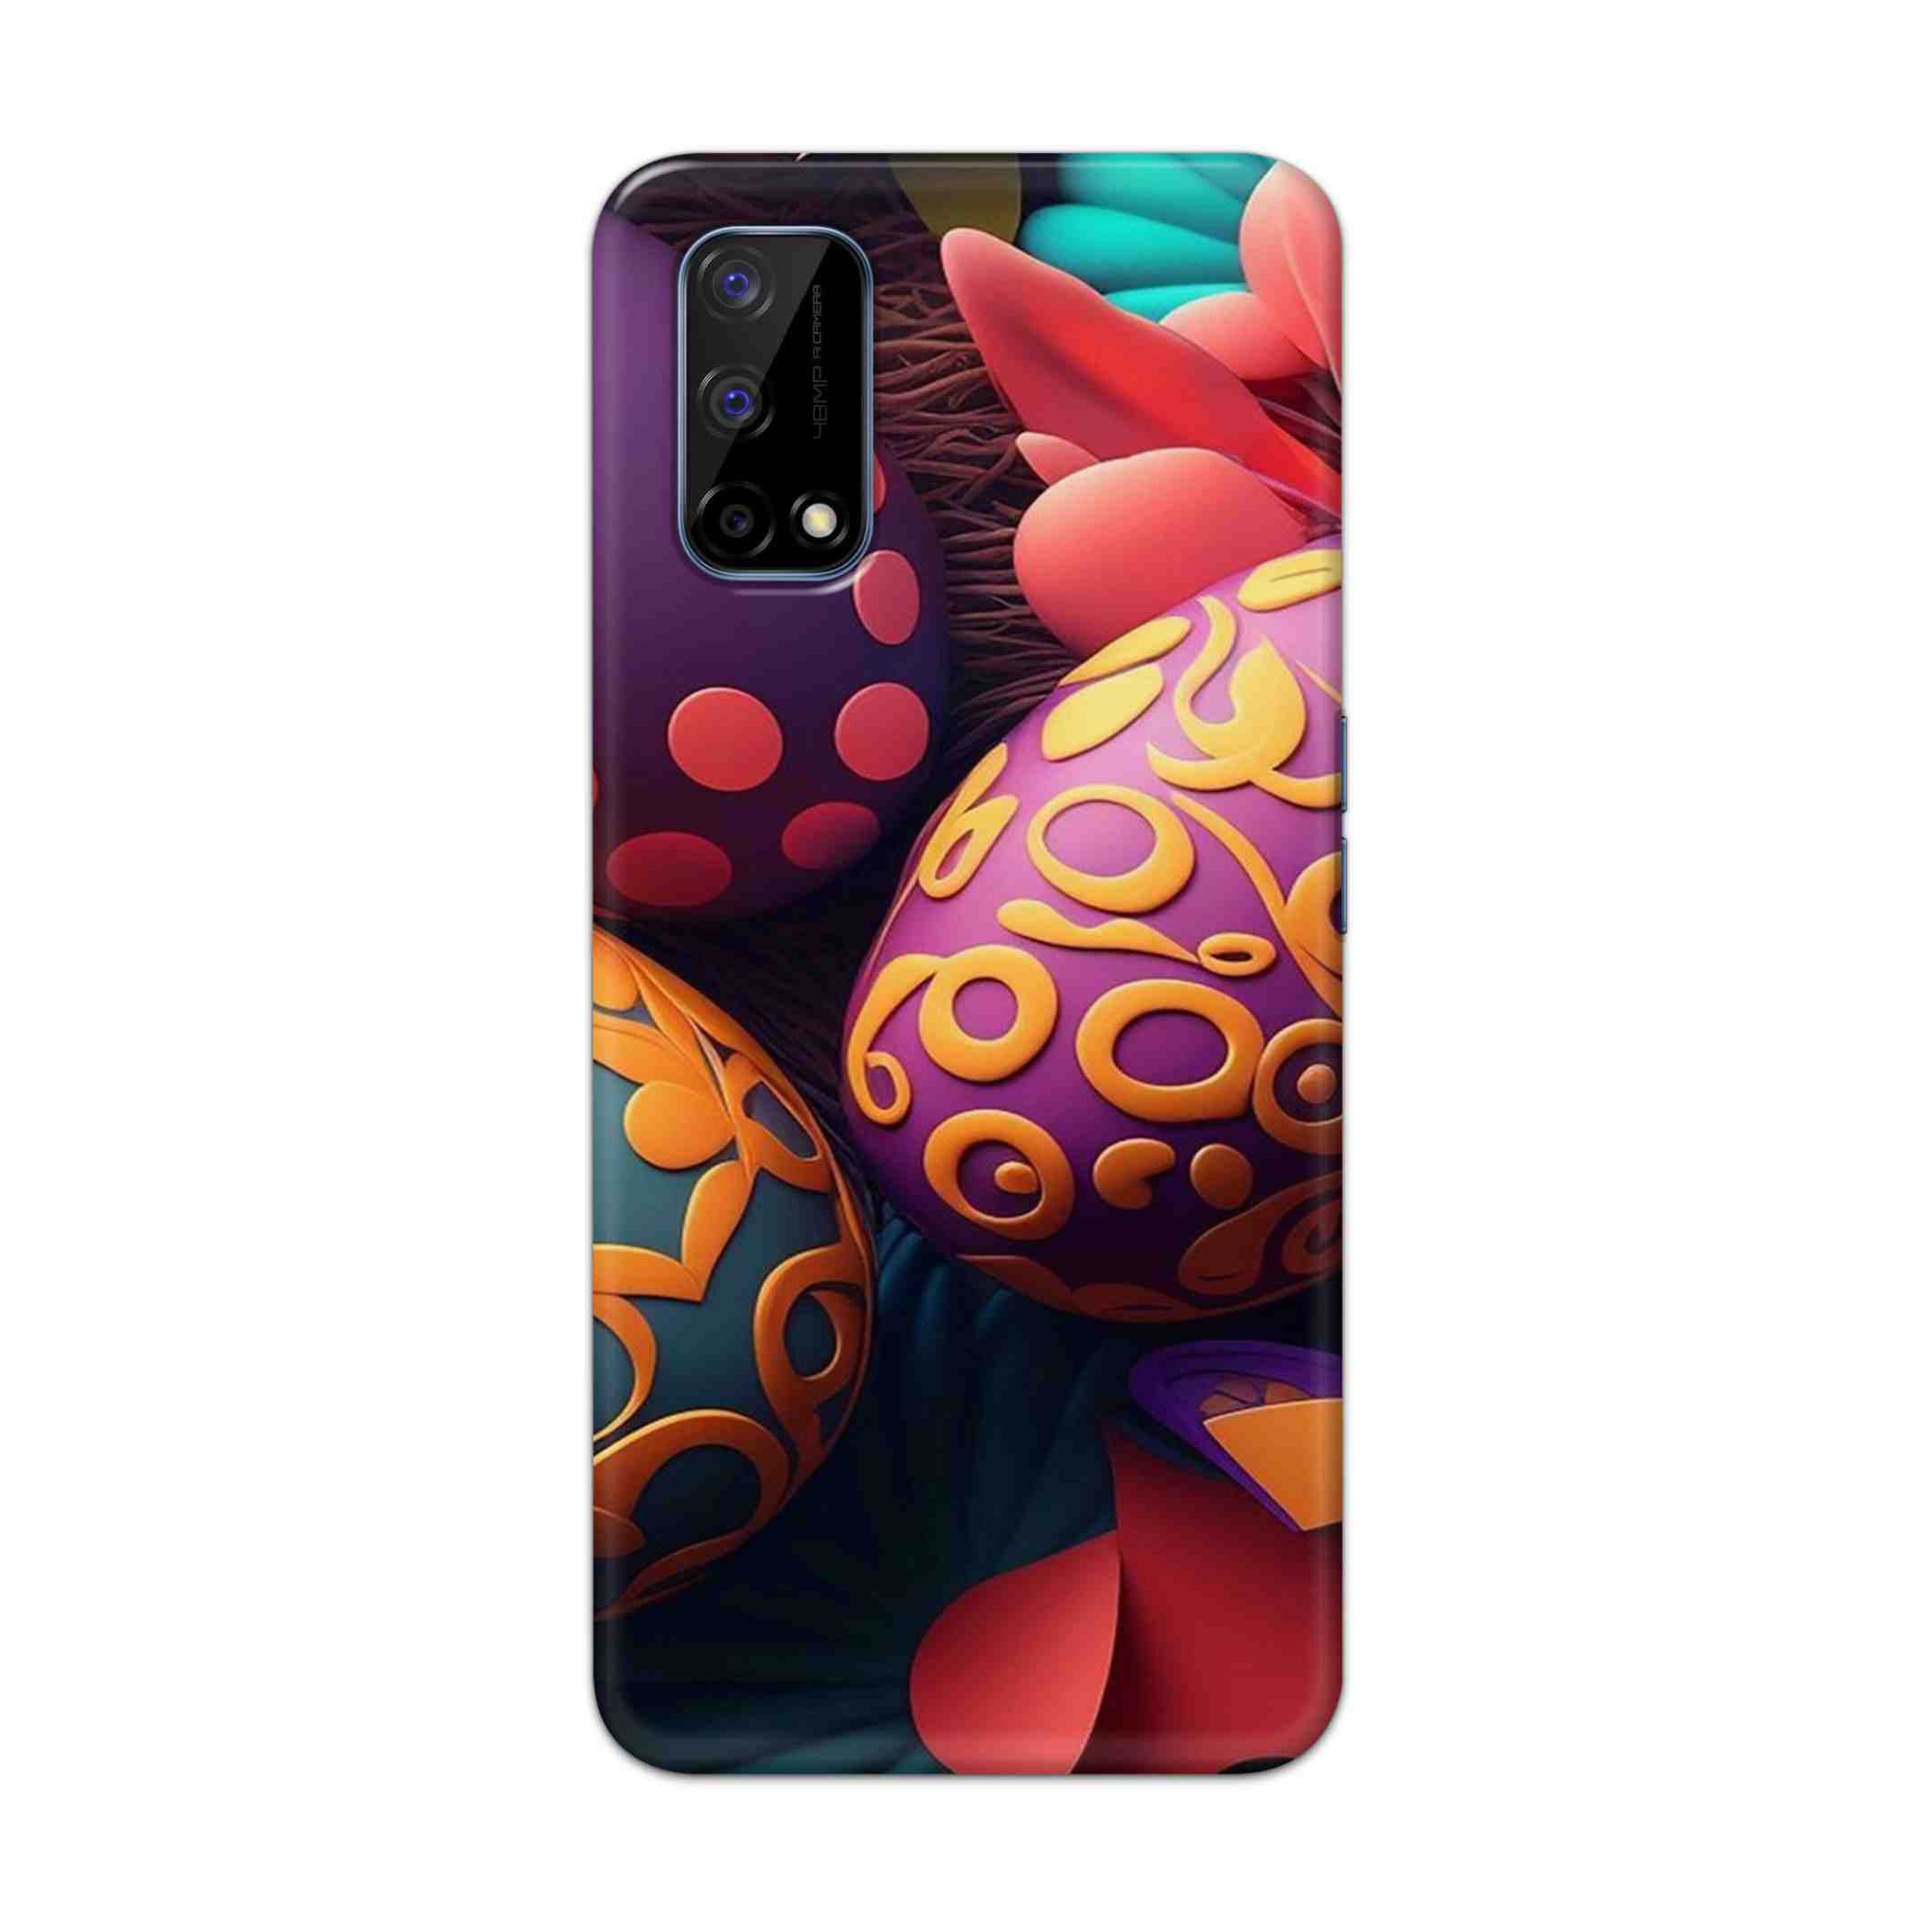 Buy Easter Egg Hard Back Mobile Phone Case Cover For Realme Narzo 30 Pro Online